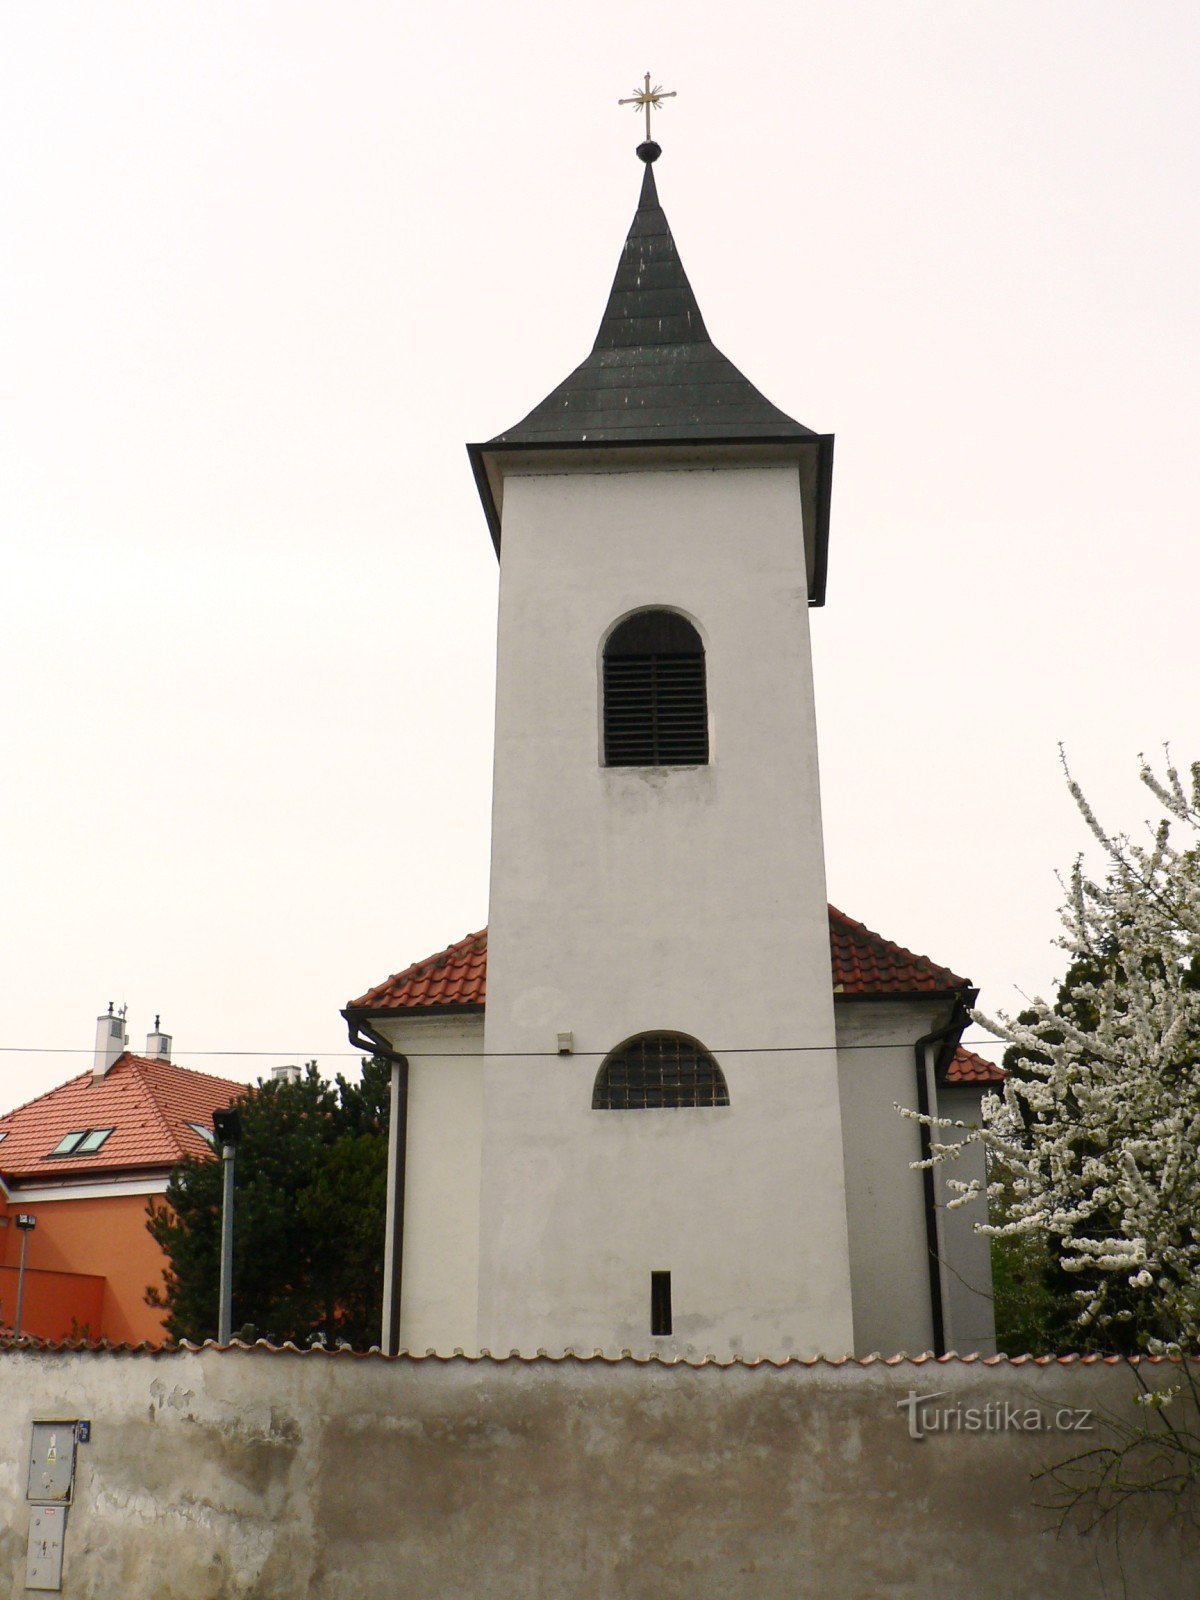 Hrnčíře (Prag) - Crkva sv. Prokopije